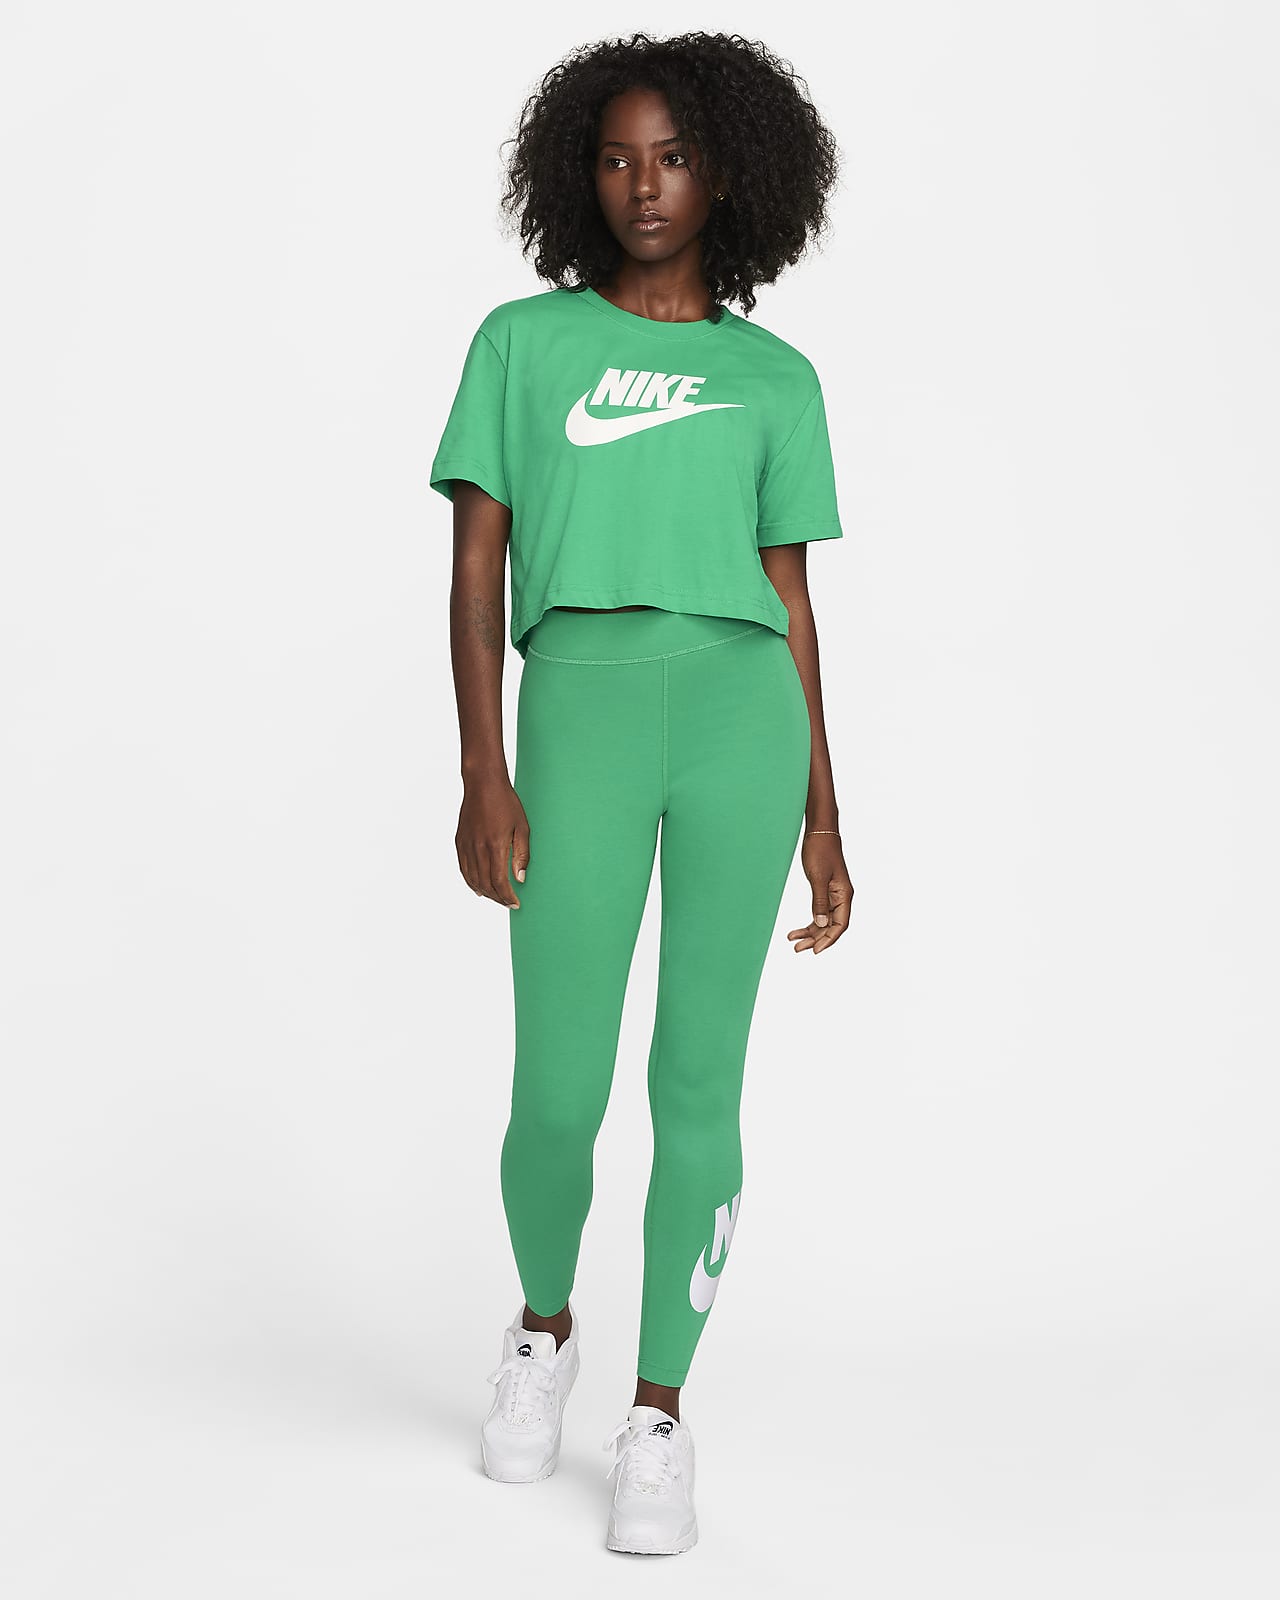 Nike Dri-FIT Cotton Pants - Dark Grey Heather - SoccerPro